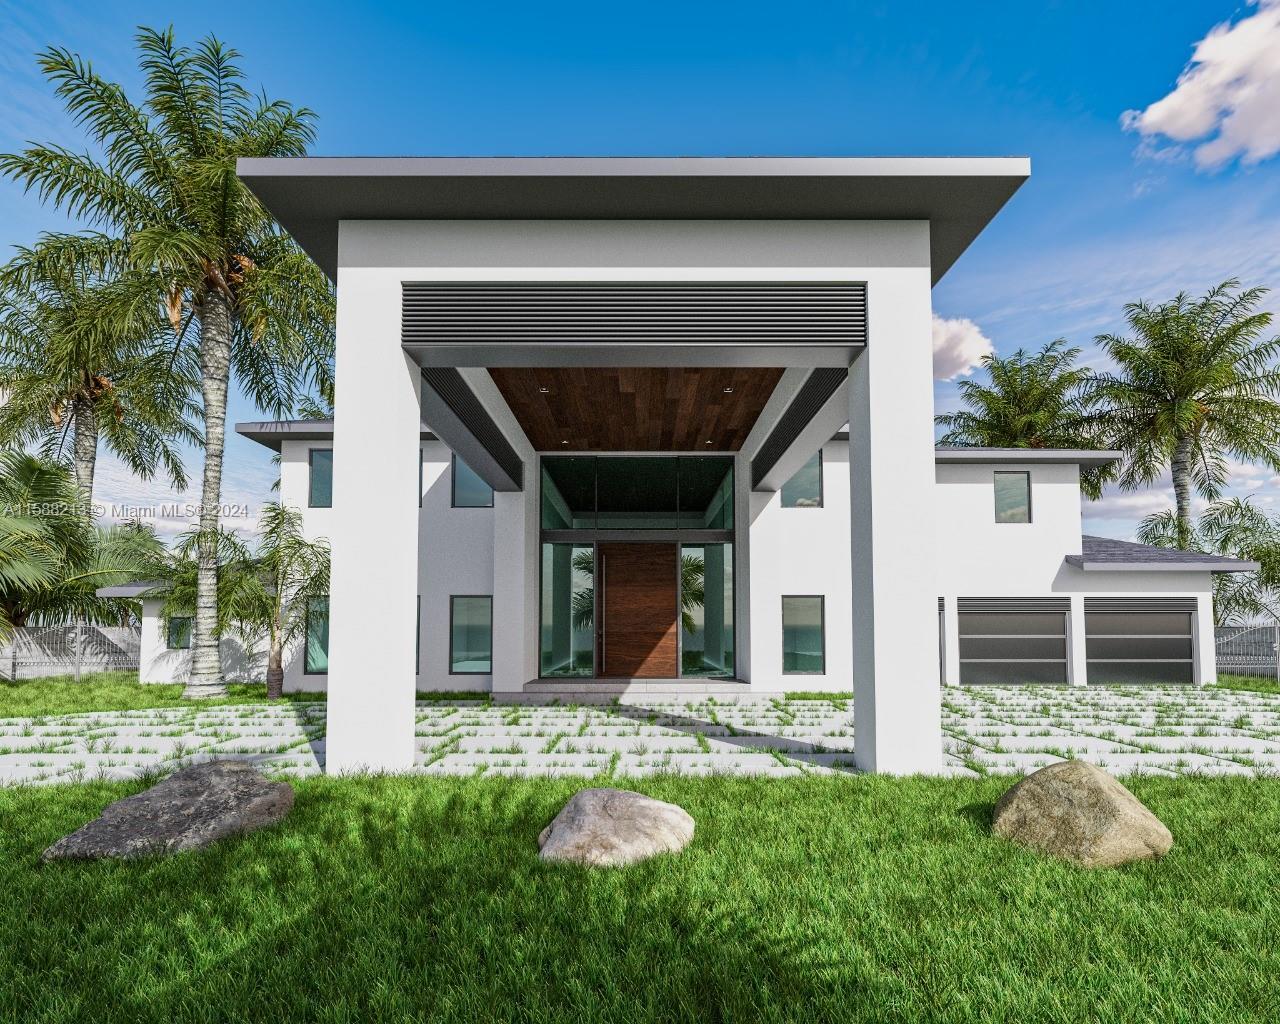 Rental Property at 150 Nw 123rd Ave, Miami, Broward County, Florida - Bedrooms: 6 
Bathrooms: 5  - $28,000 MO.